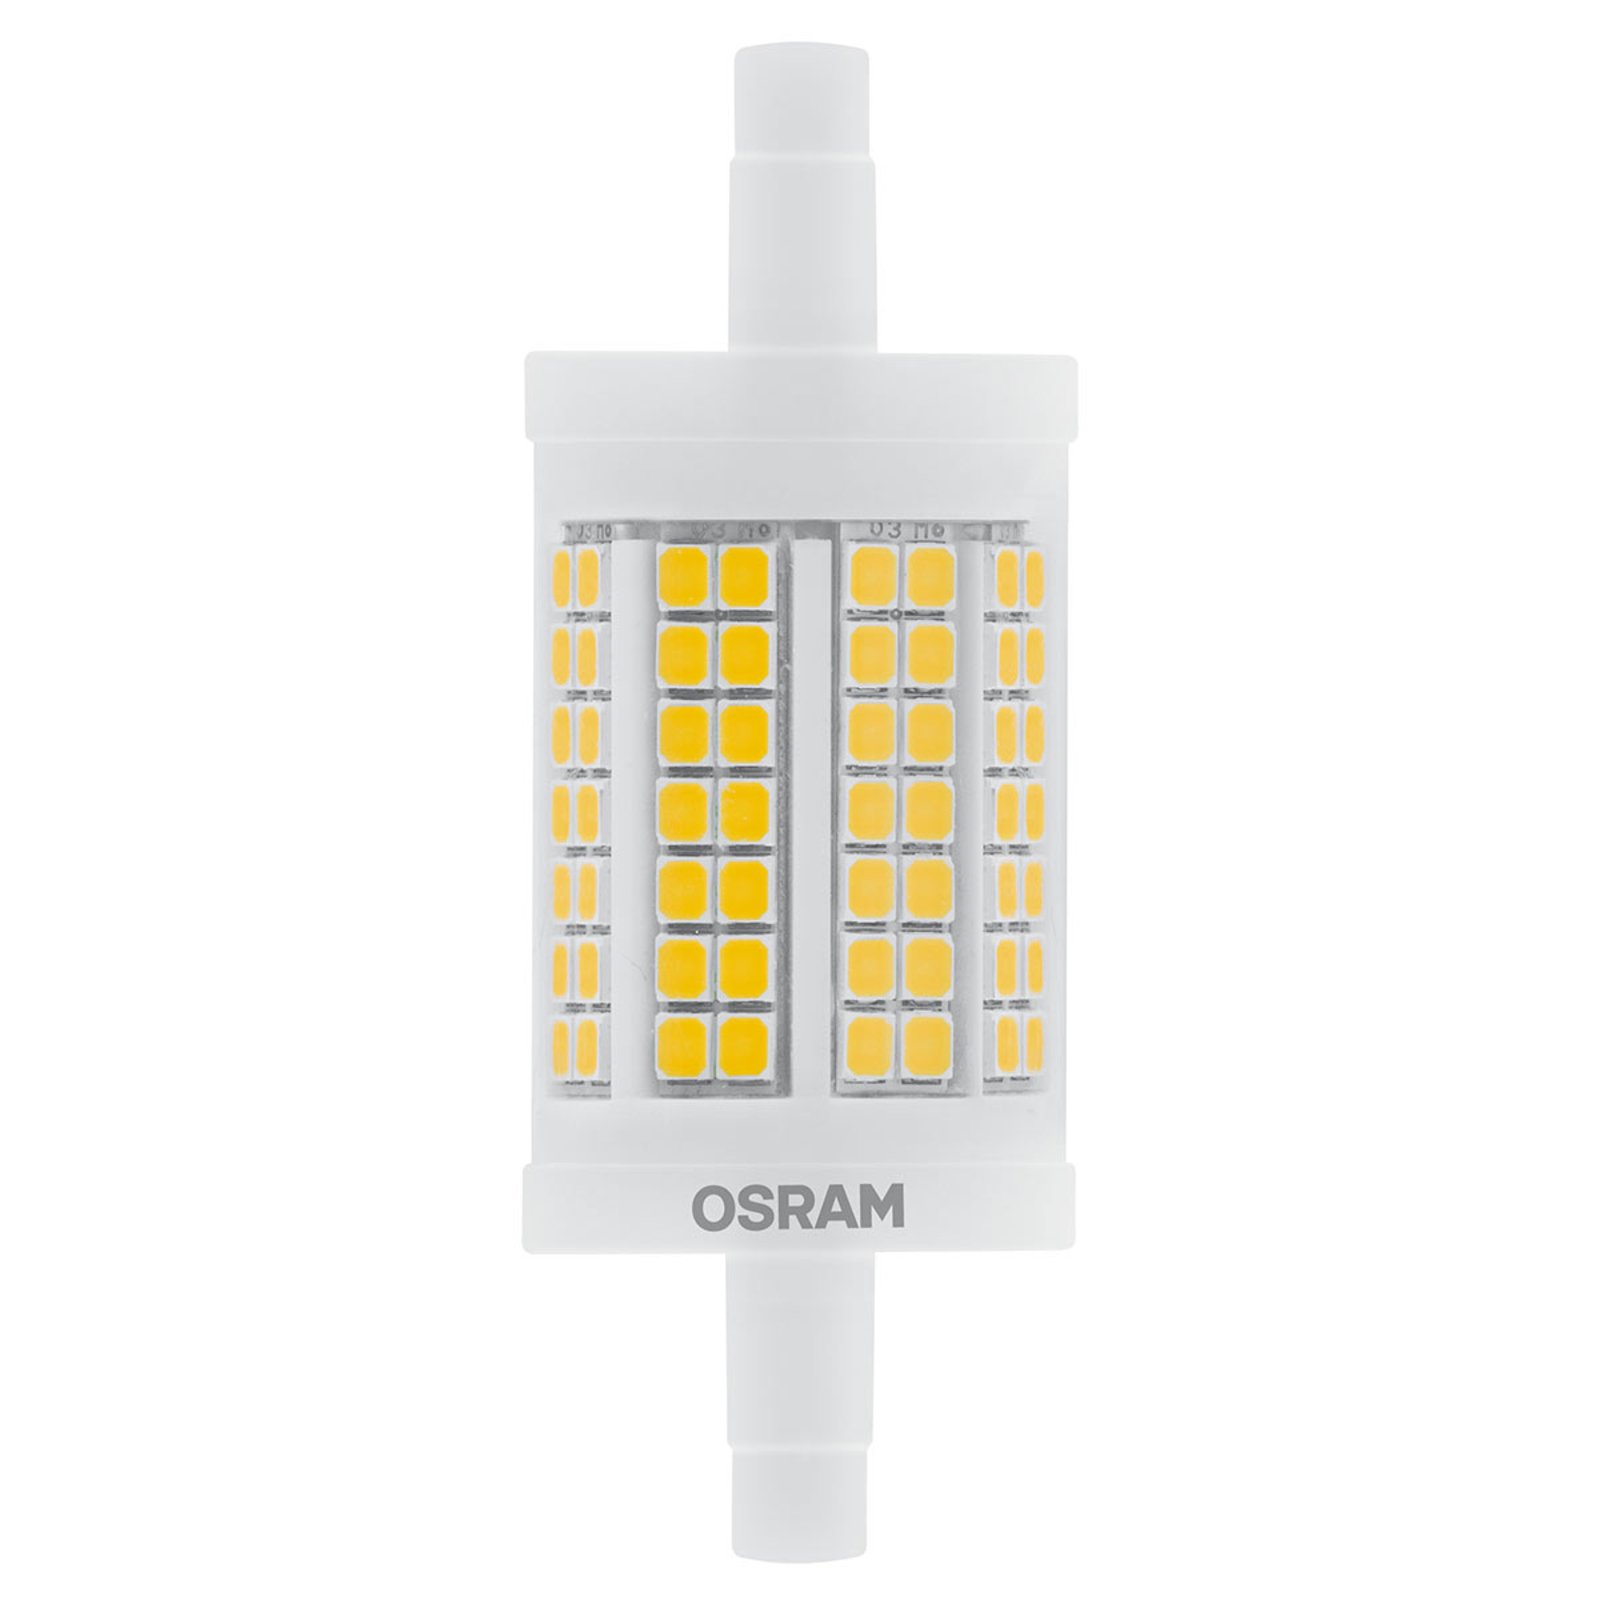 OSRAM LED-stav R7s 11,5W varmhvid, 1.521 lm